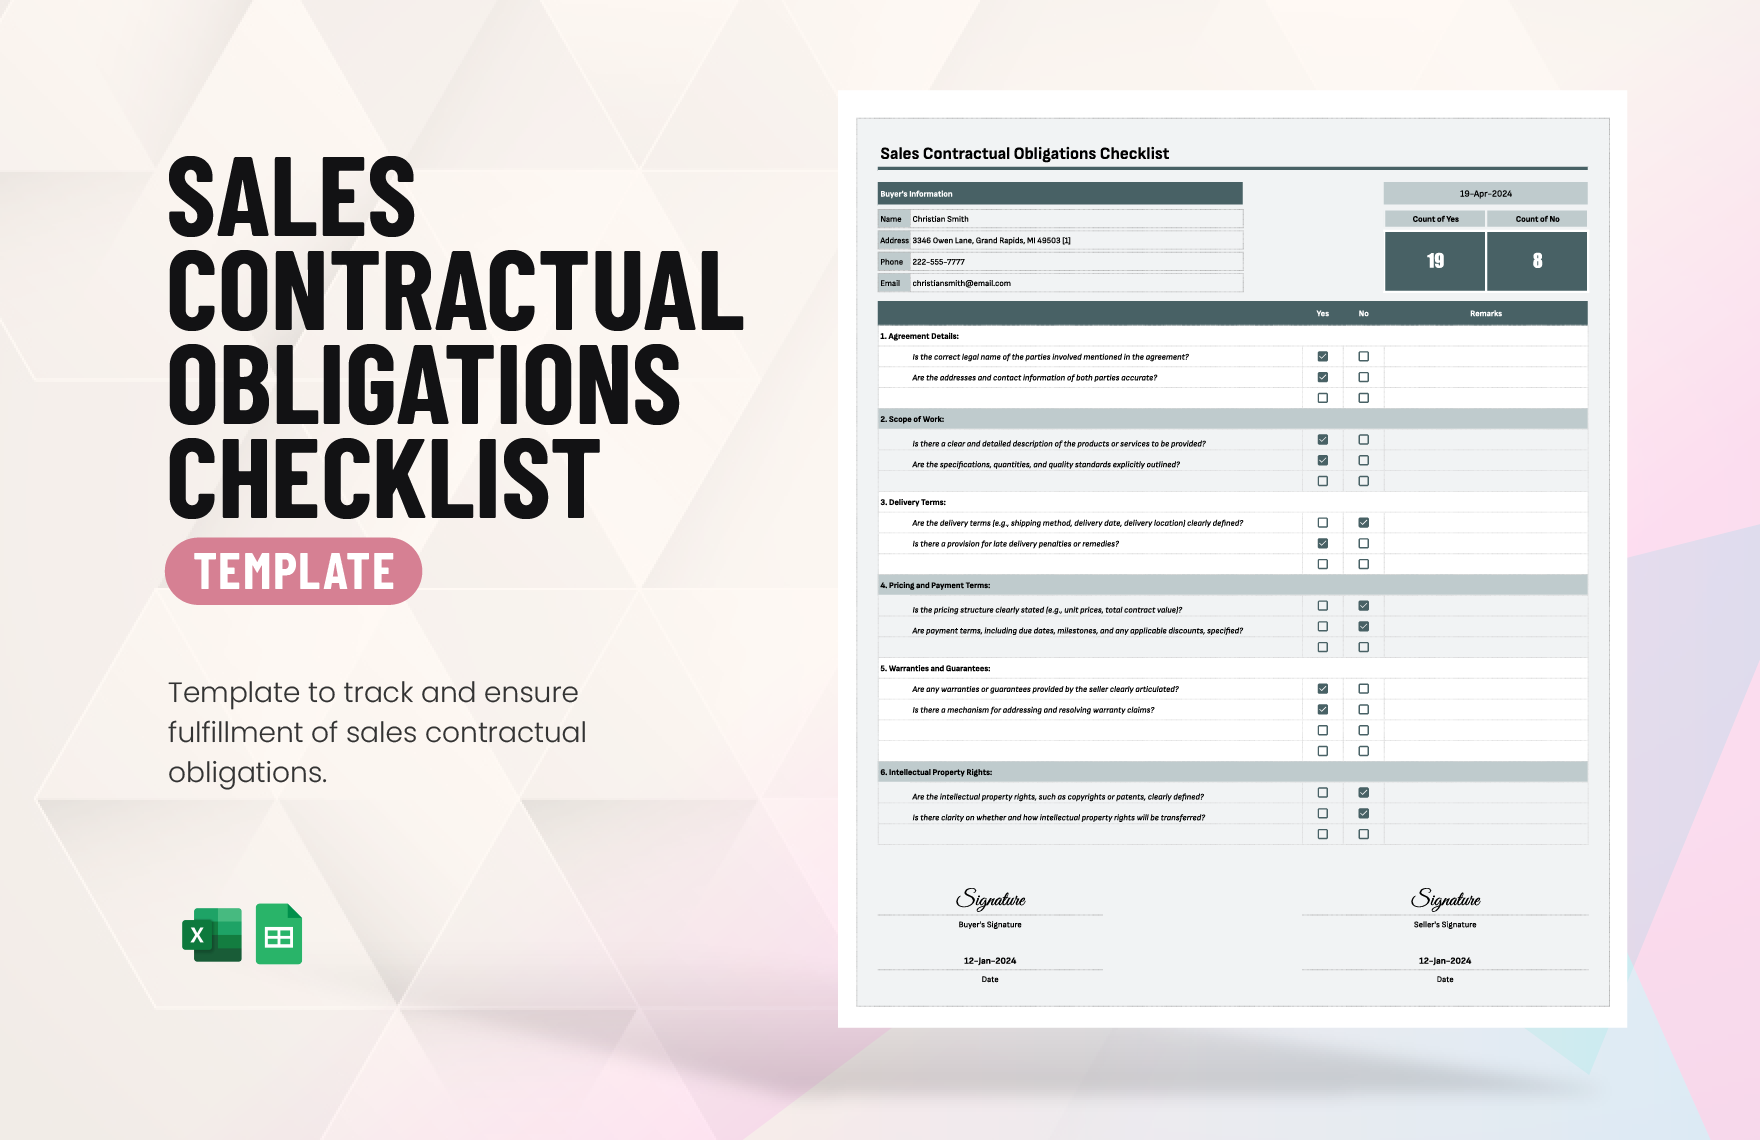 Sales Contractual Obligations Checklist Template in Excel, Google Sheets